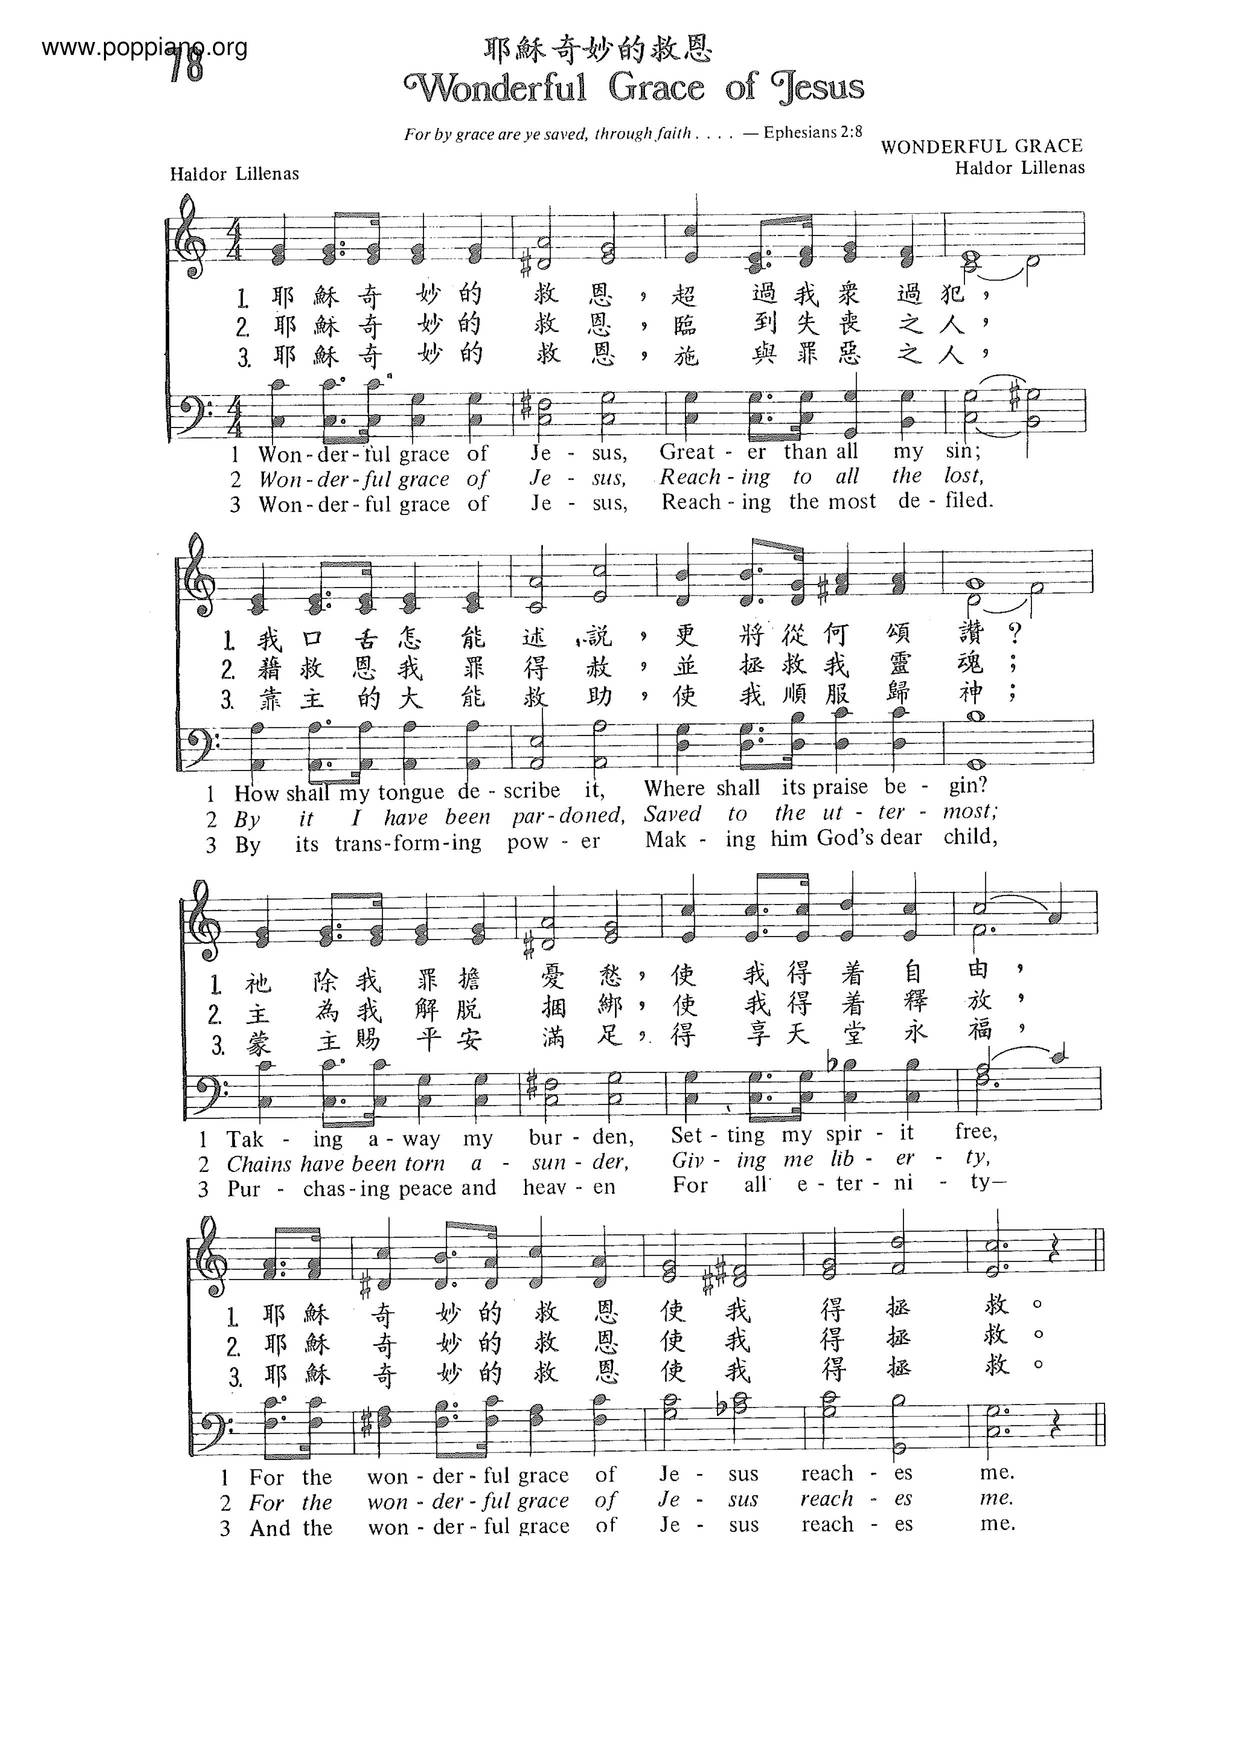 The Amazing Salvation Of Jesus Score